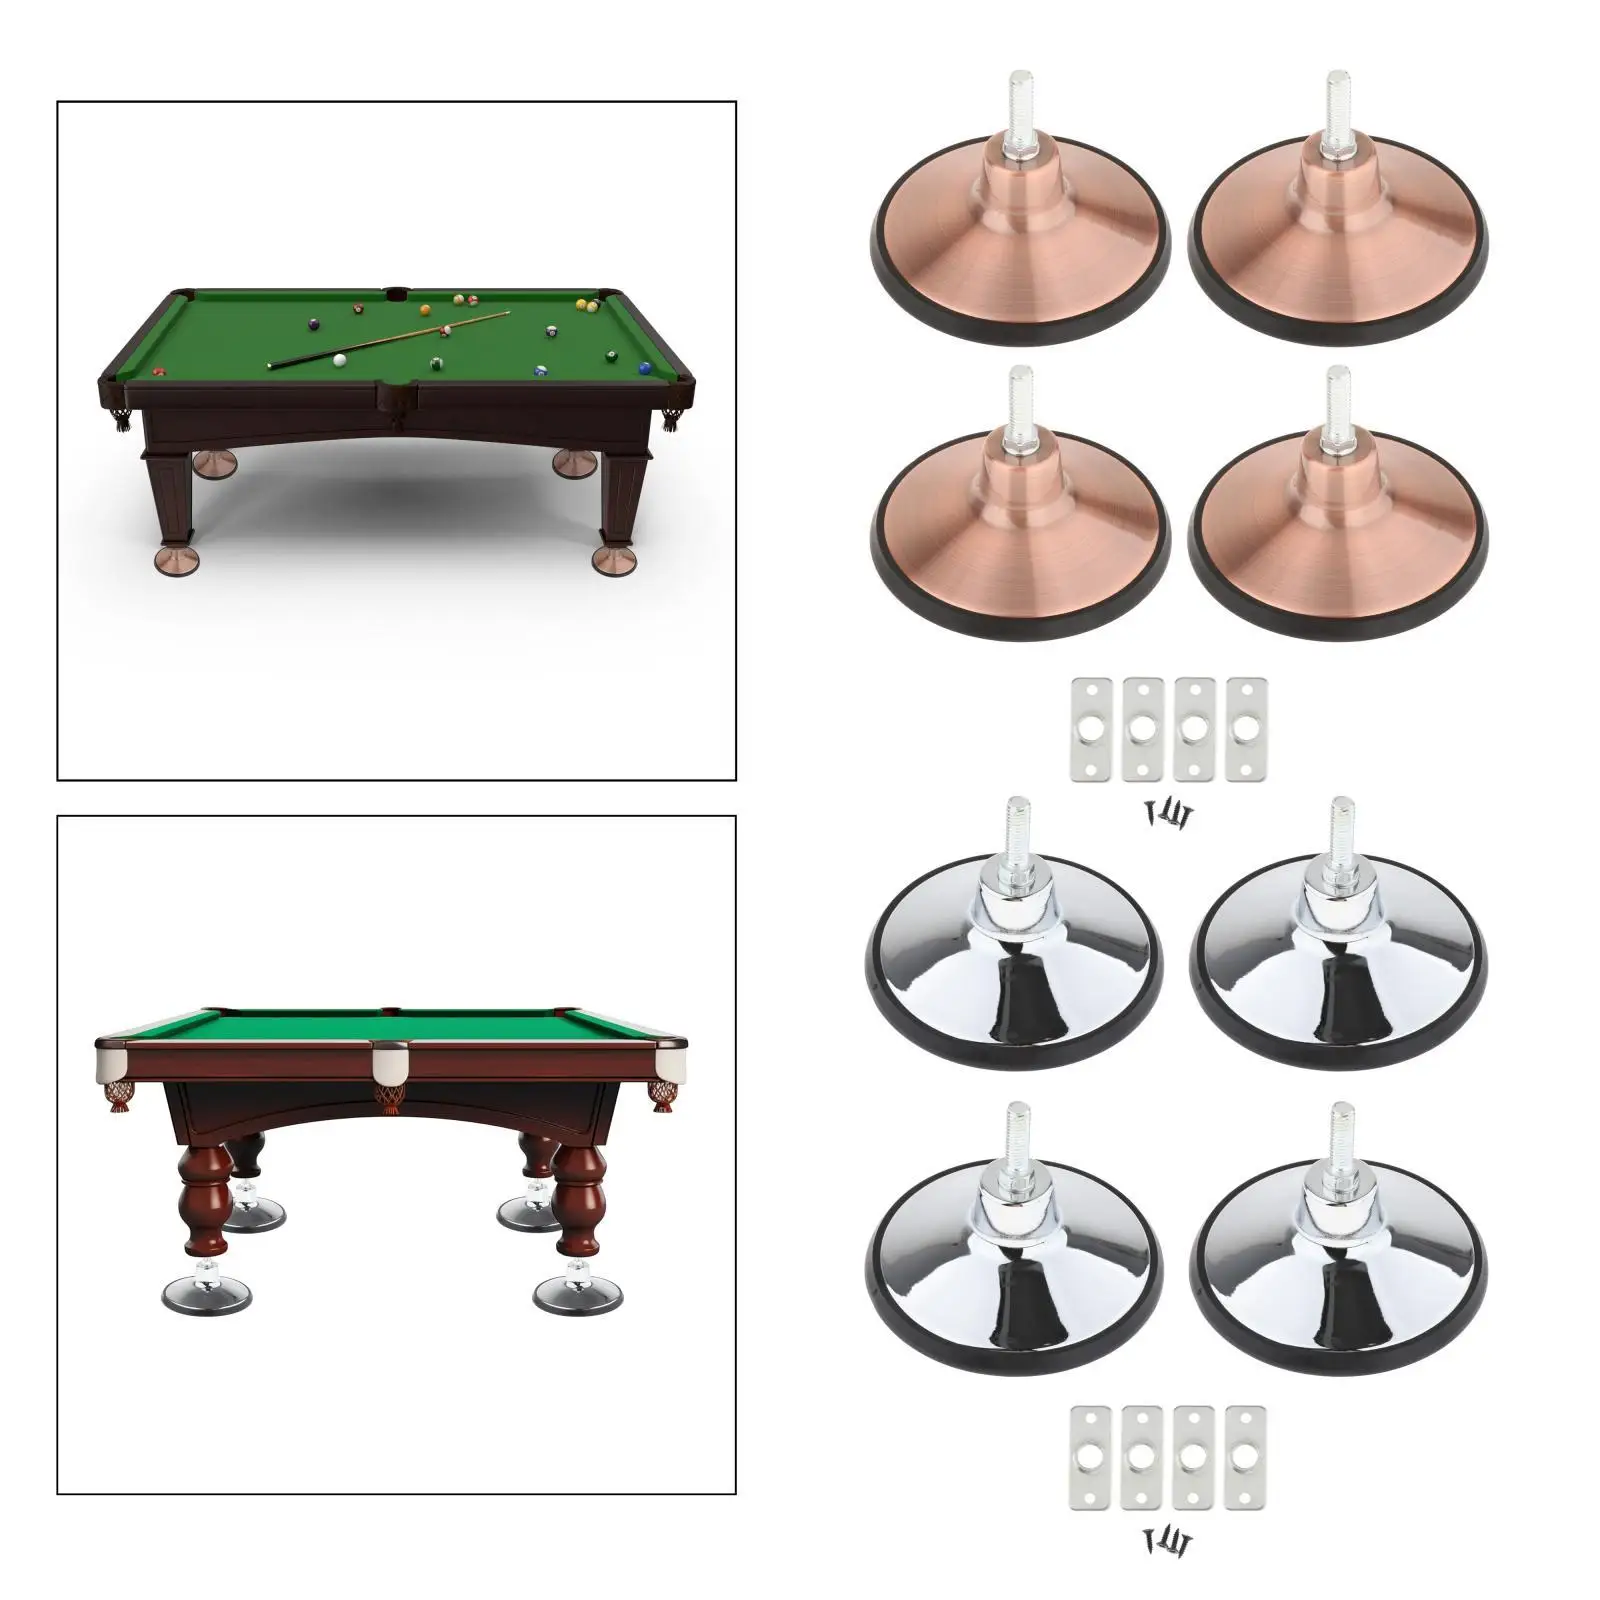 4x Billiard Pool Table Leg Levelers Metal Hardware for Football/Soccer Table